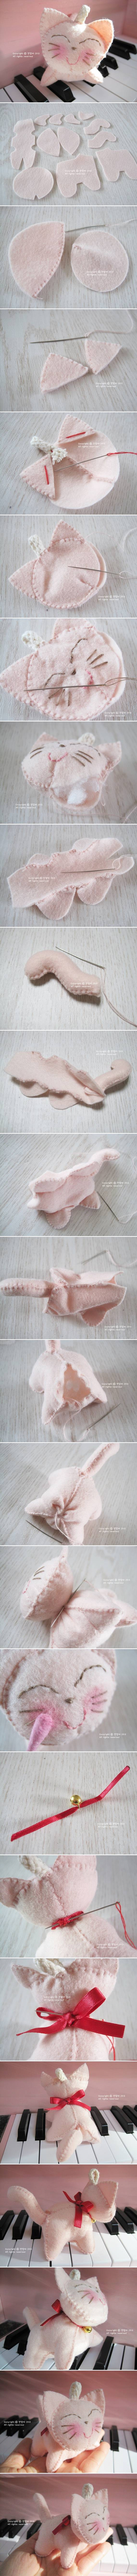 DIY Adorable Fabric Kitten 2